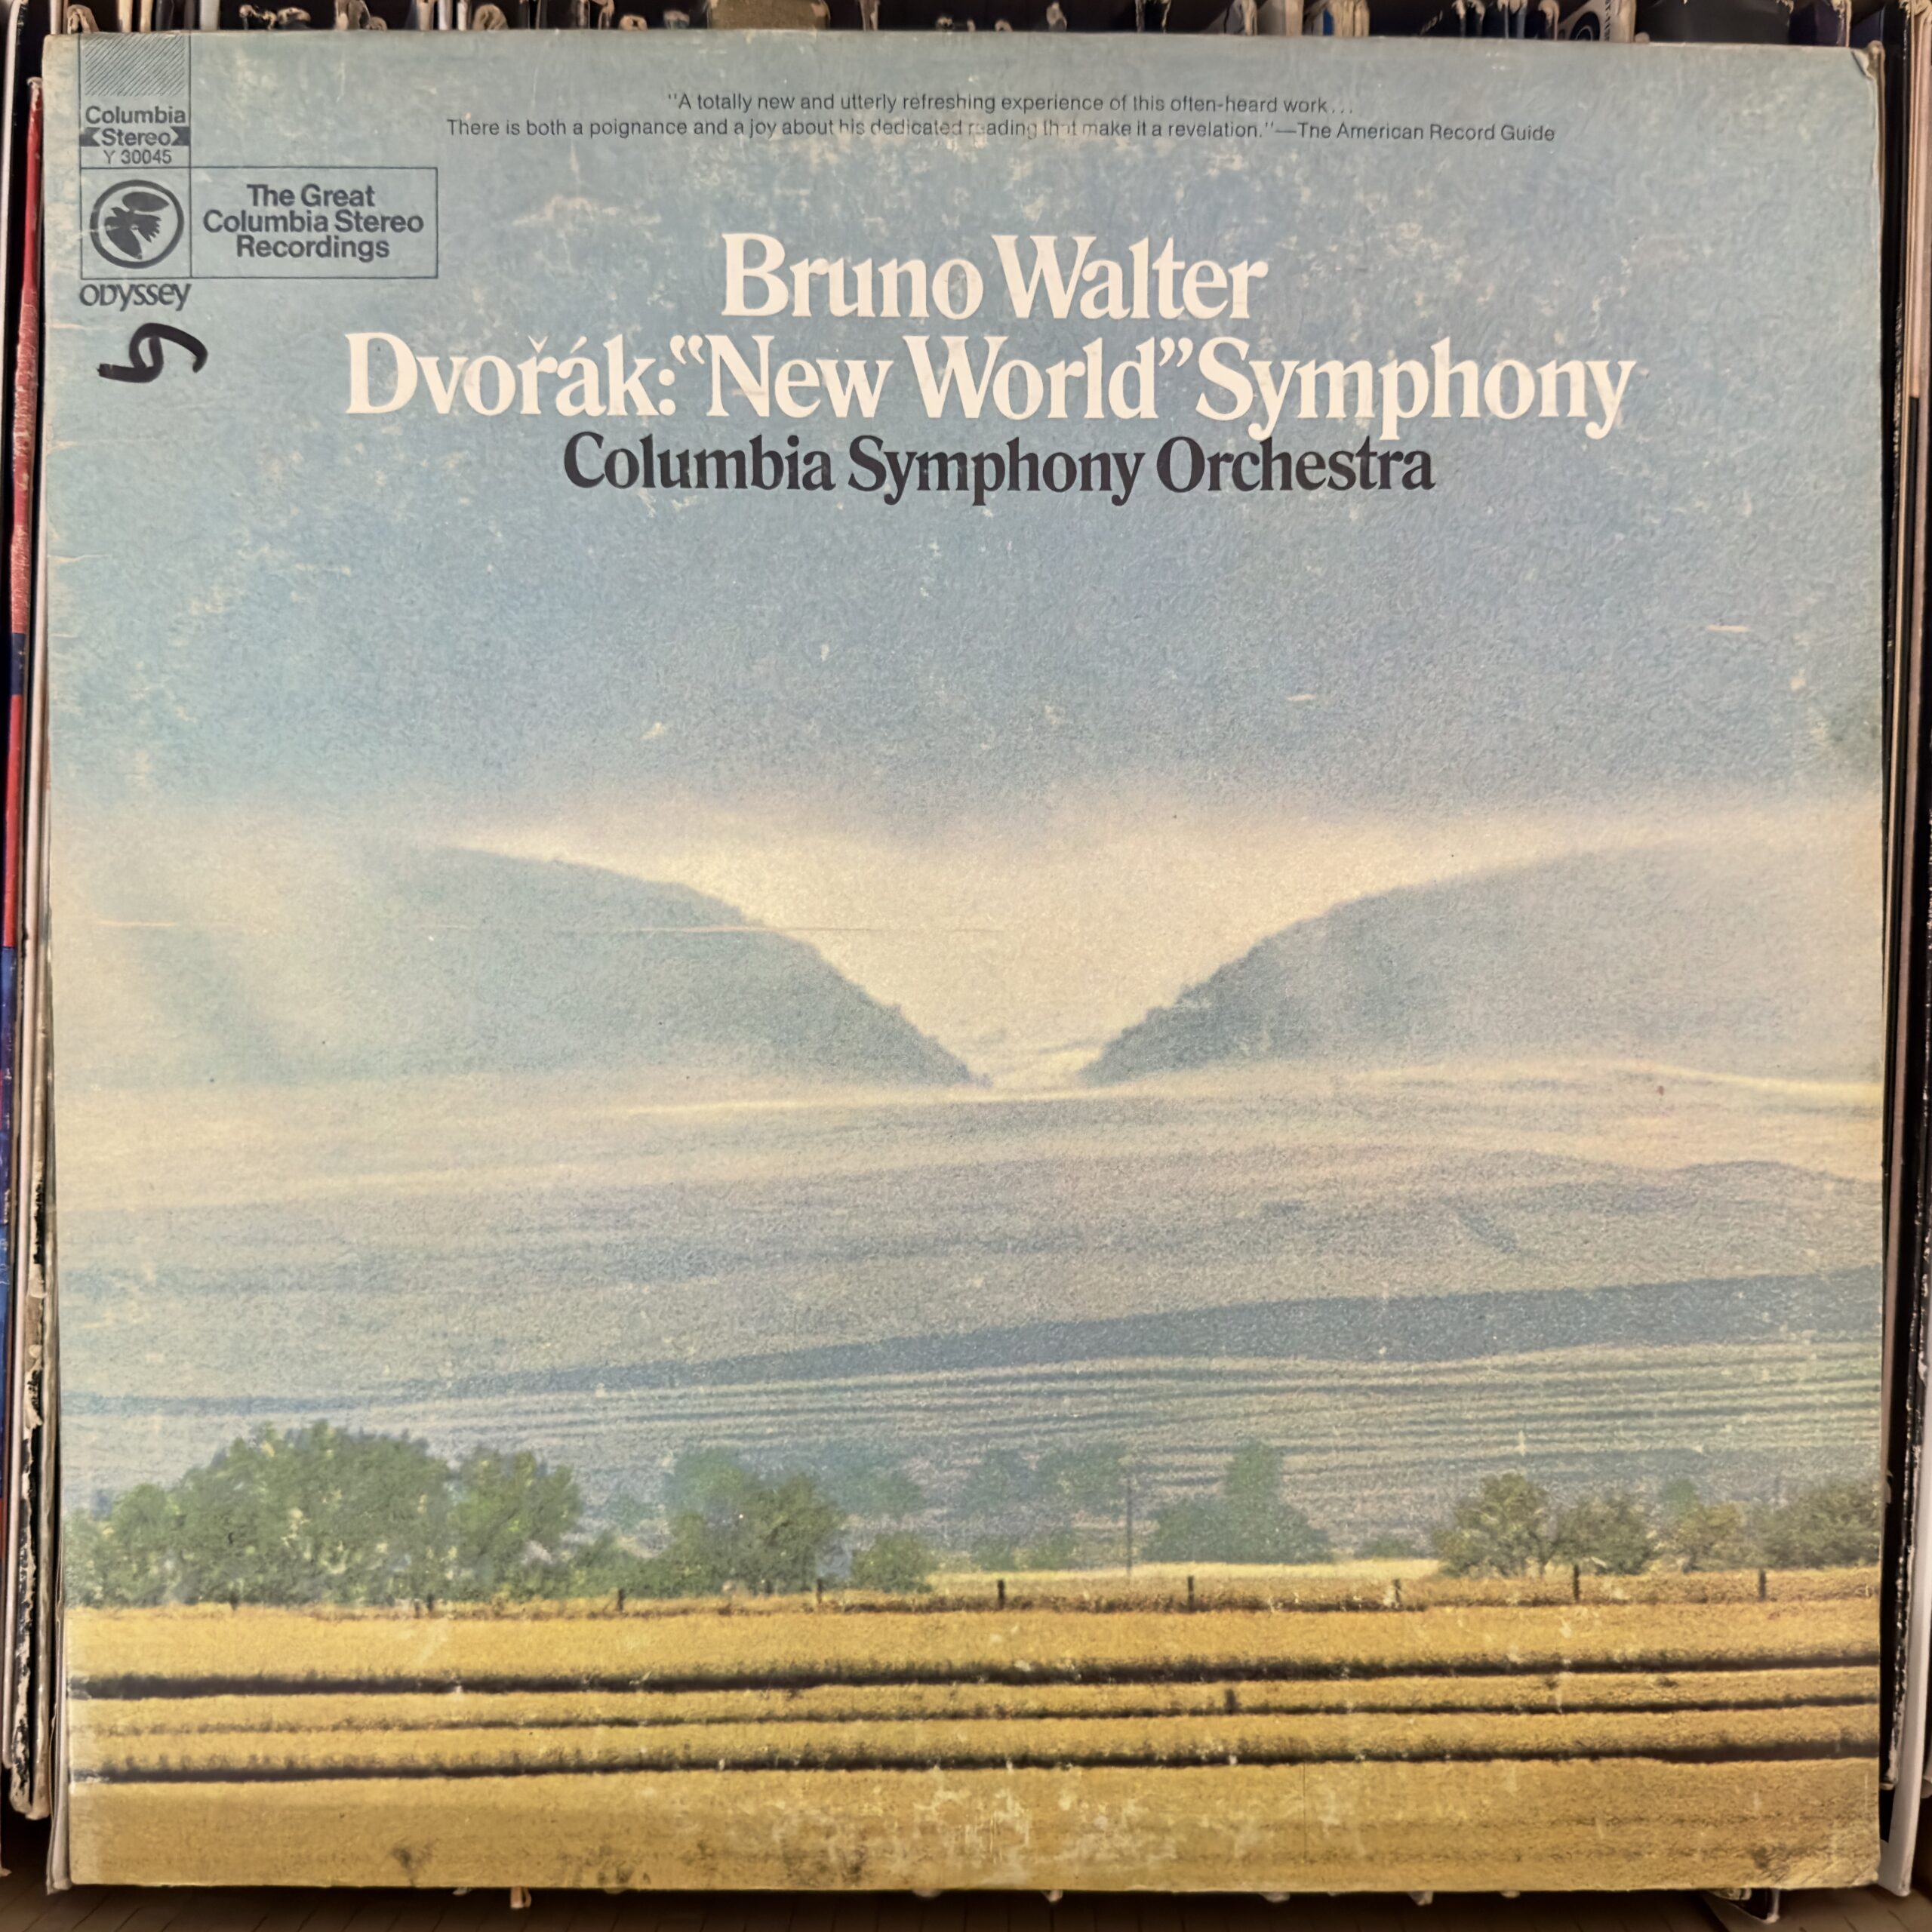 Dvořák: "New World" Symphony by Bruno Walter and the Columbia Symphony Orchestra 